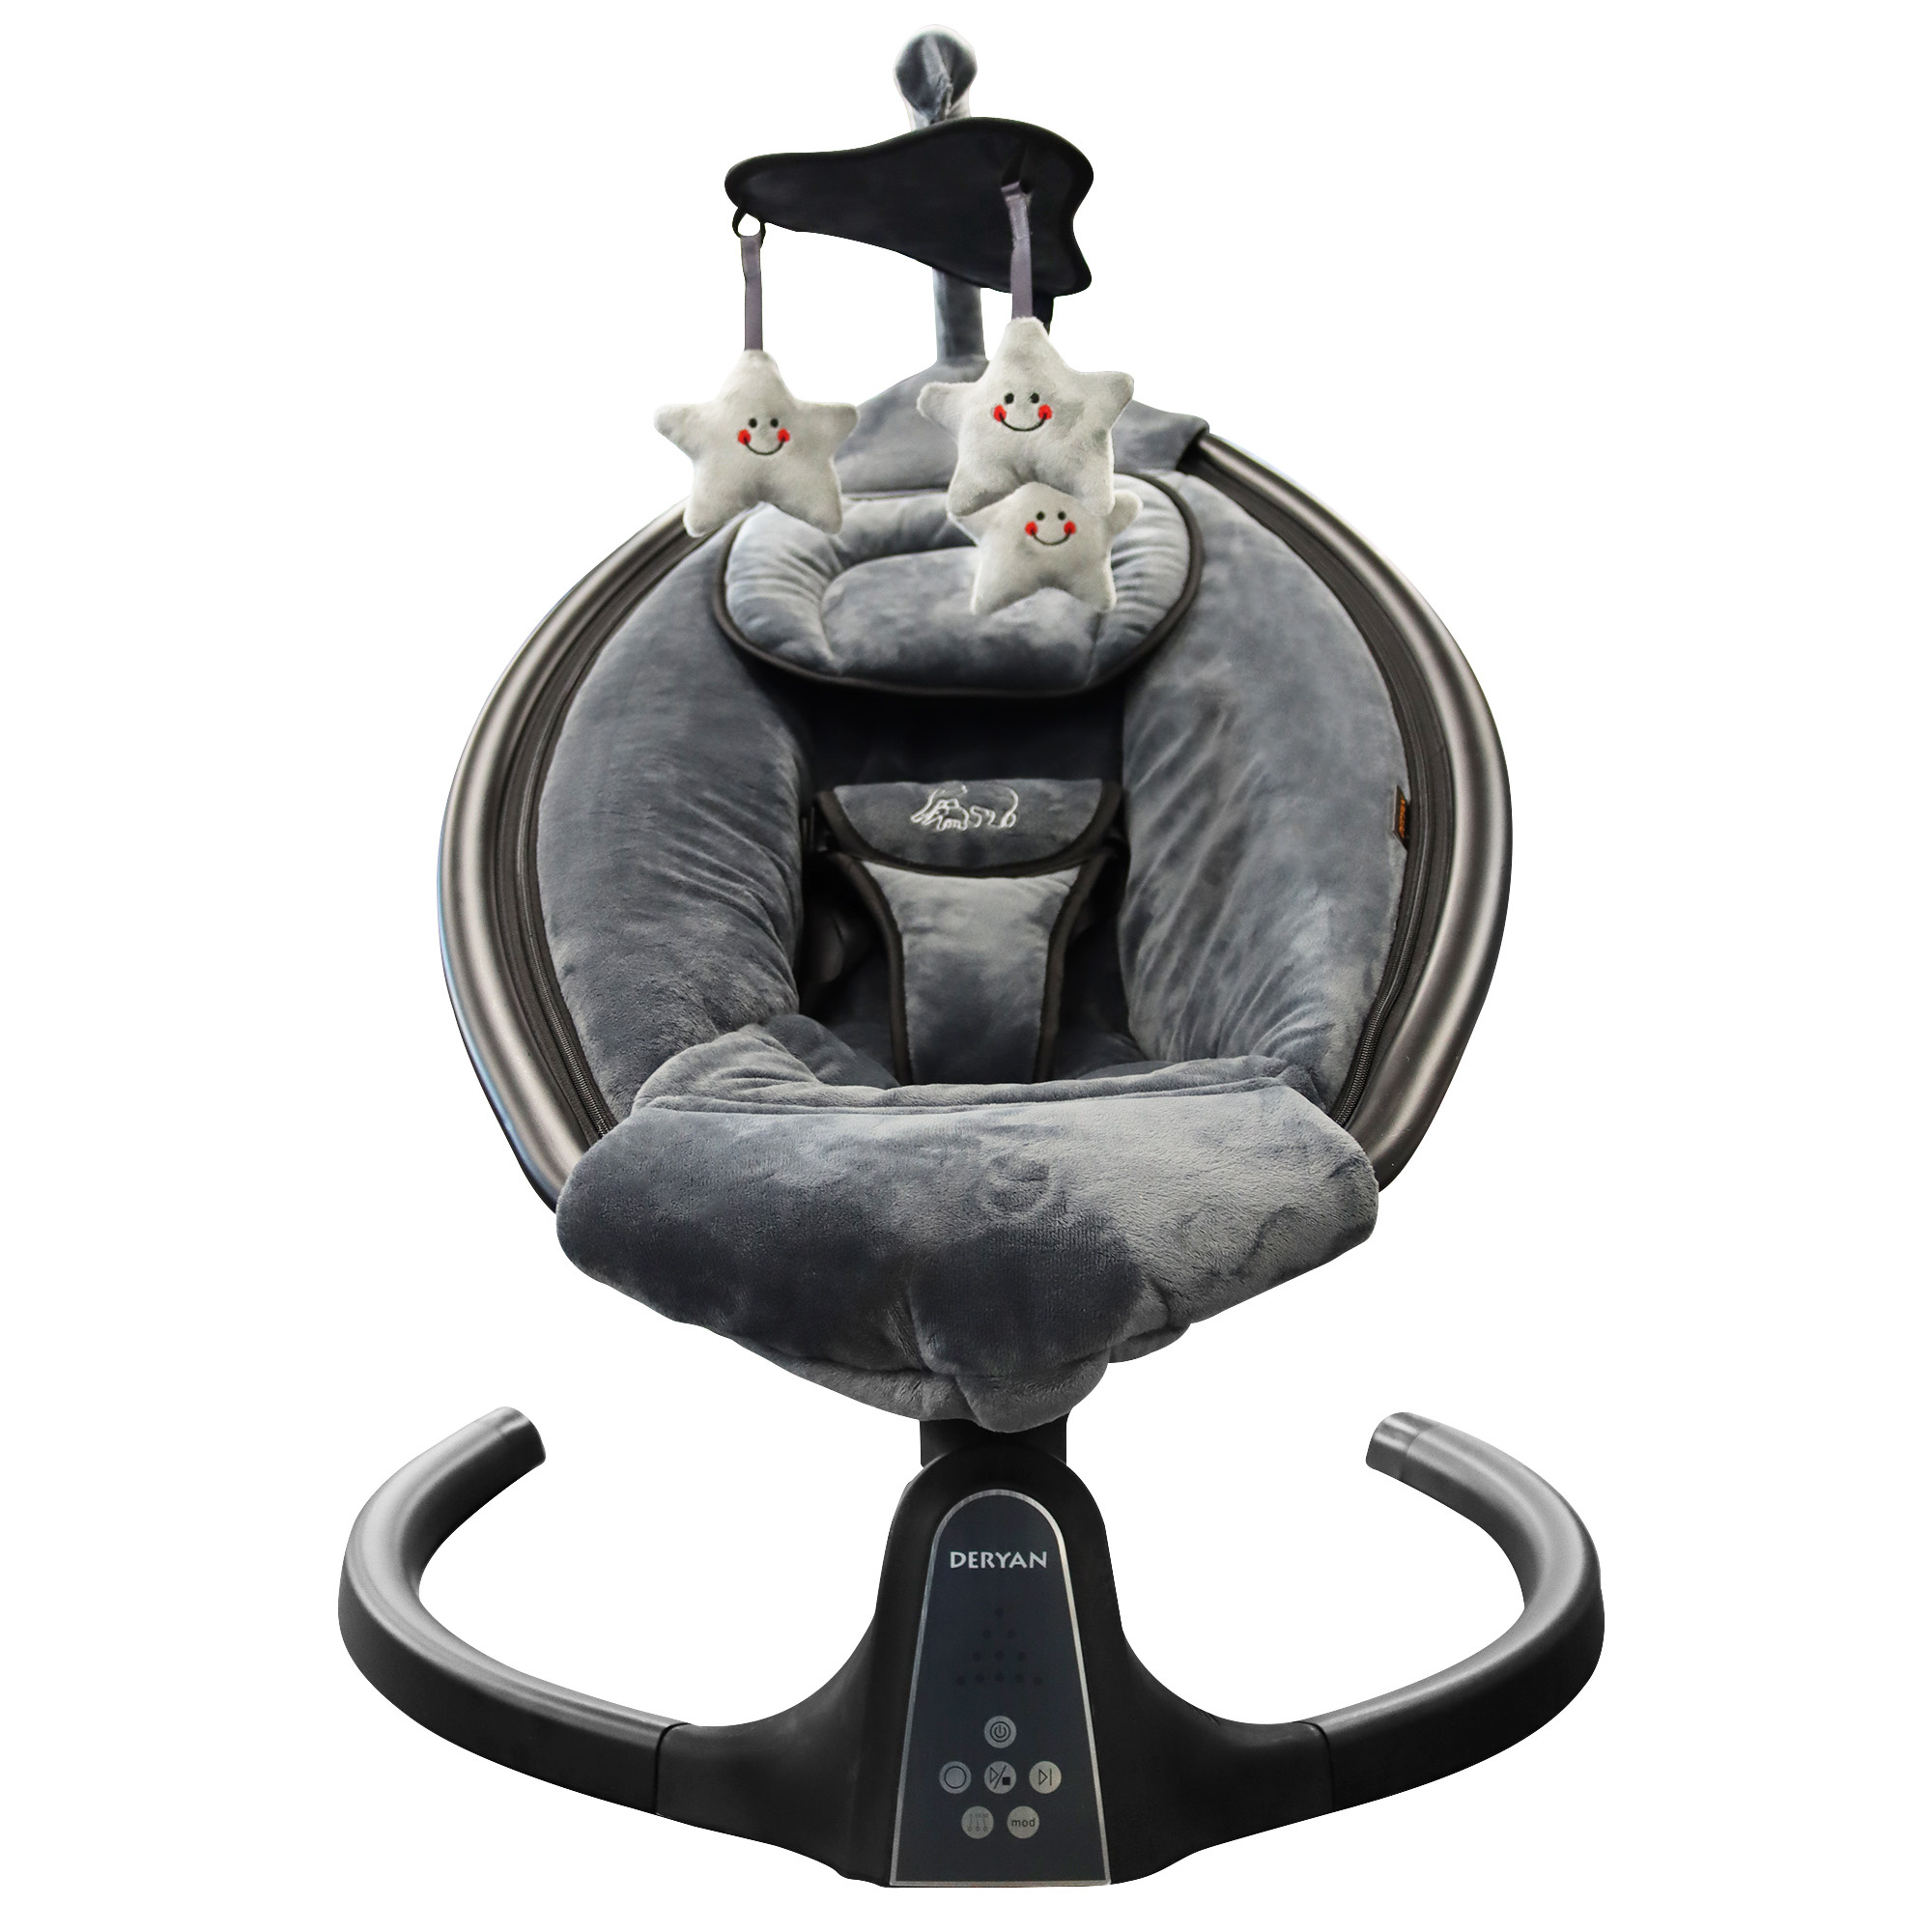 Dusver Dhr sneeuwman Deryan Baby Wipstoel - Schommelstoel - Elektrische schommel stoel baby -  Schommelstoel met Bluetoothfunctie en Afstandsbediening - BABY-PHANT